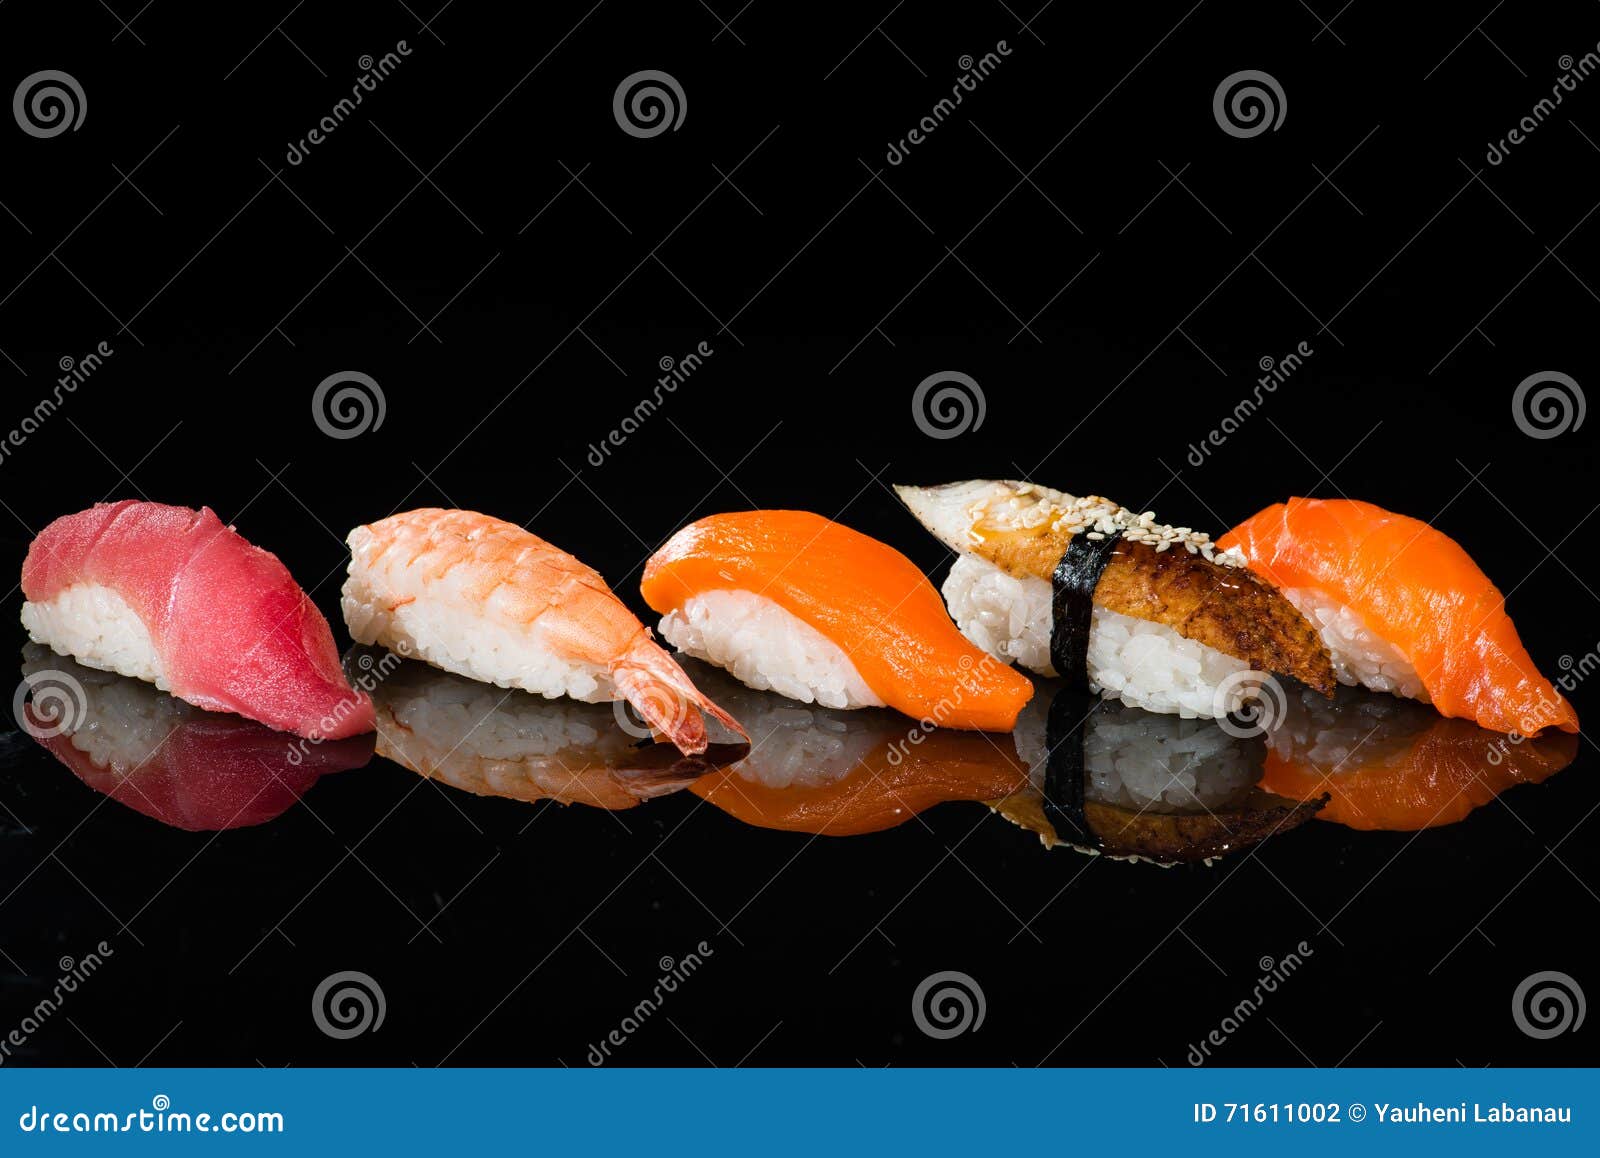 assortment of nigiri sushi with shrimp, salmon, tuna and eel